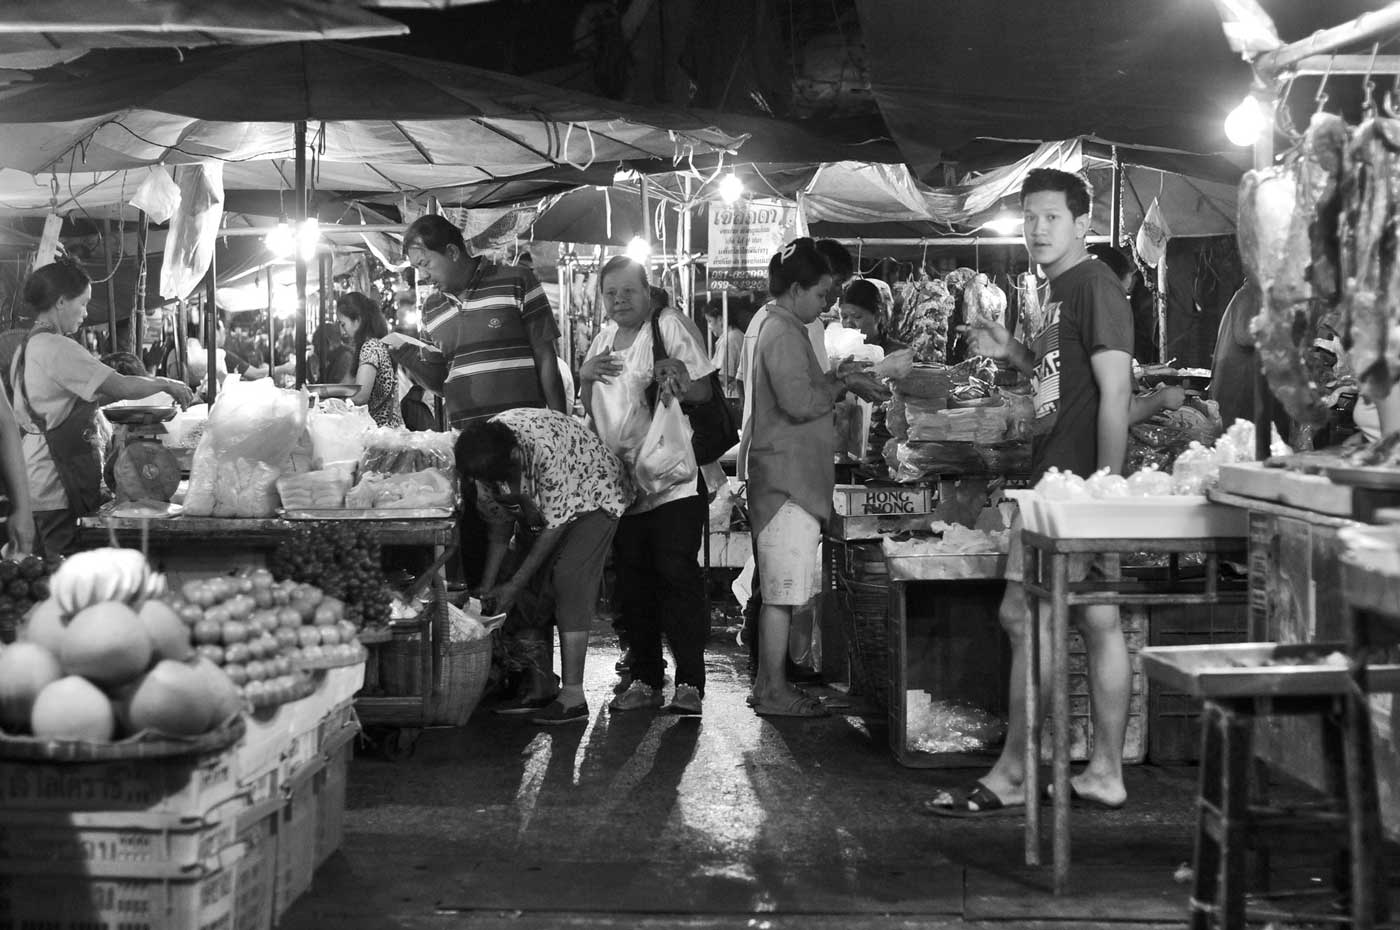 Morning market in Lopburi